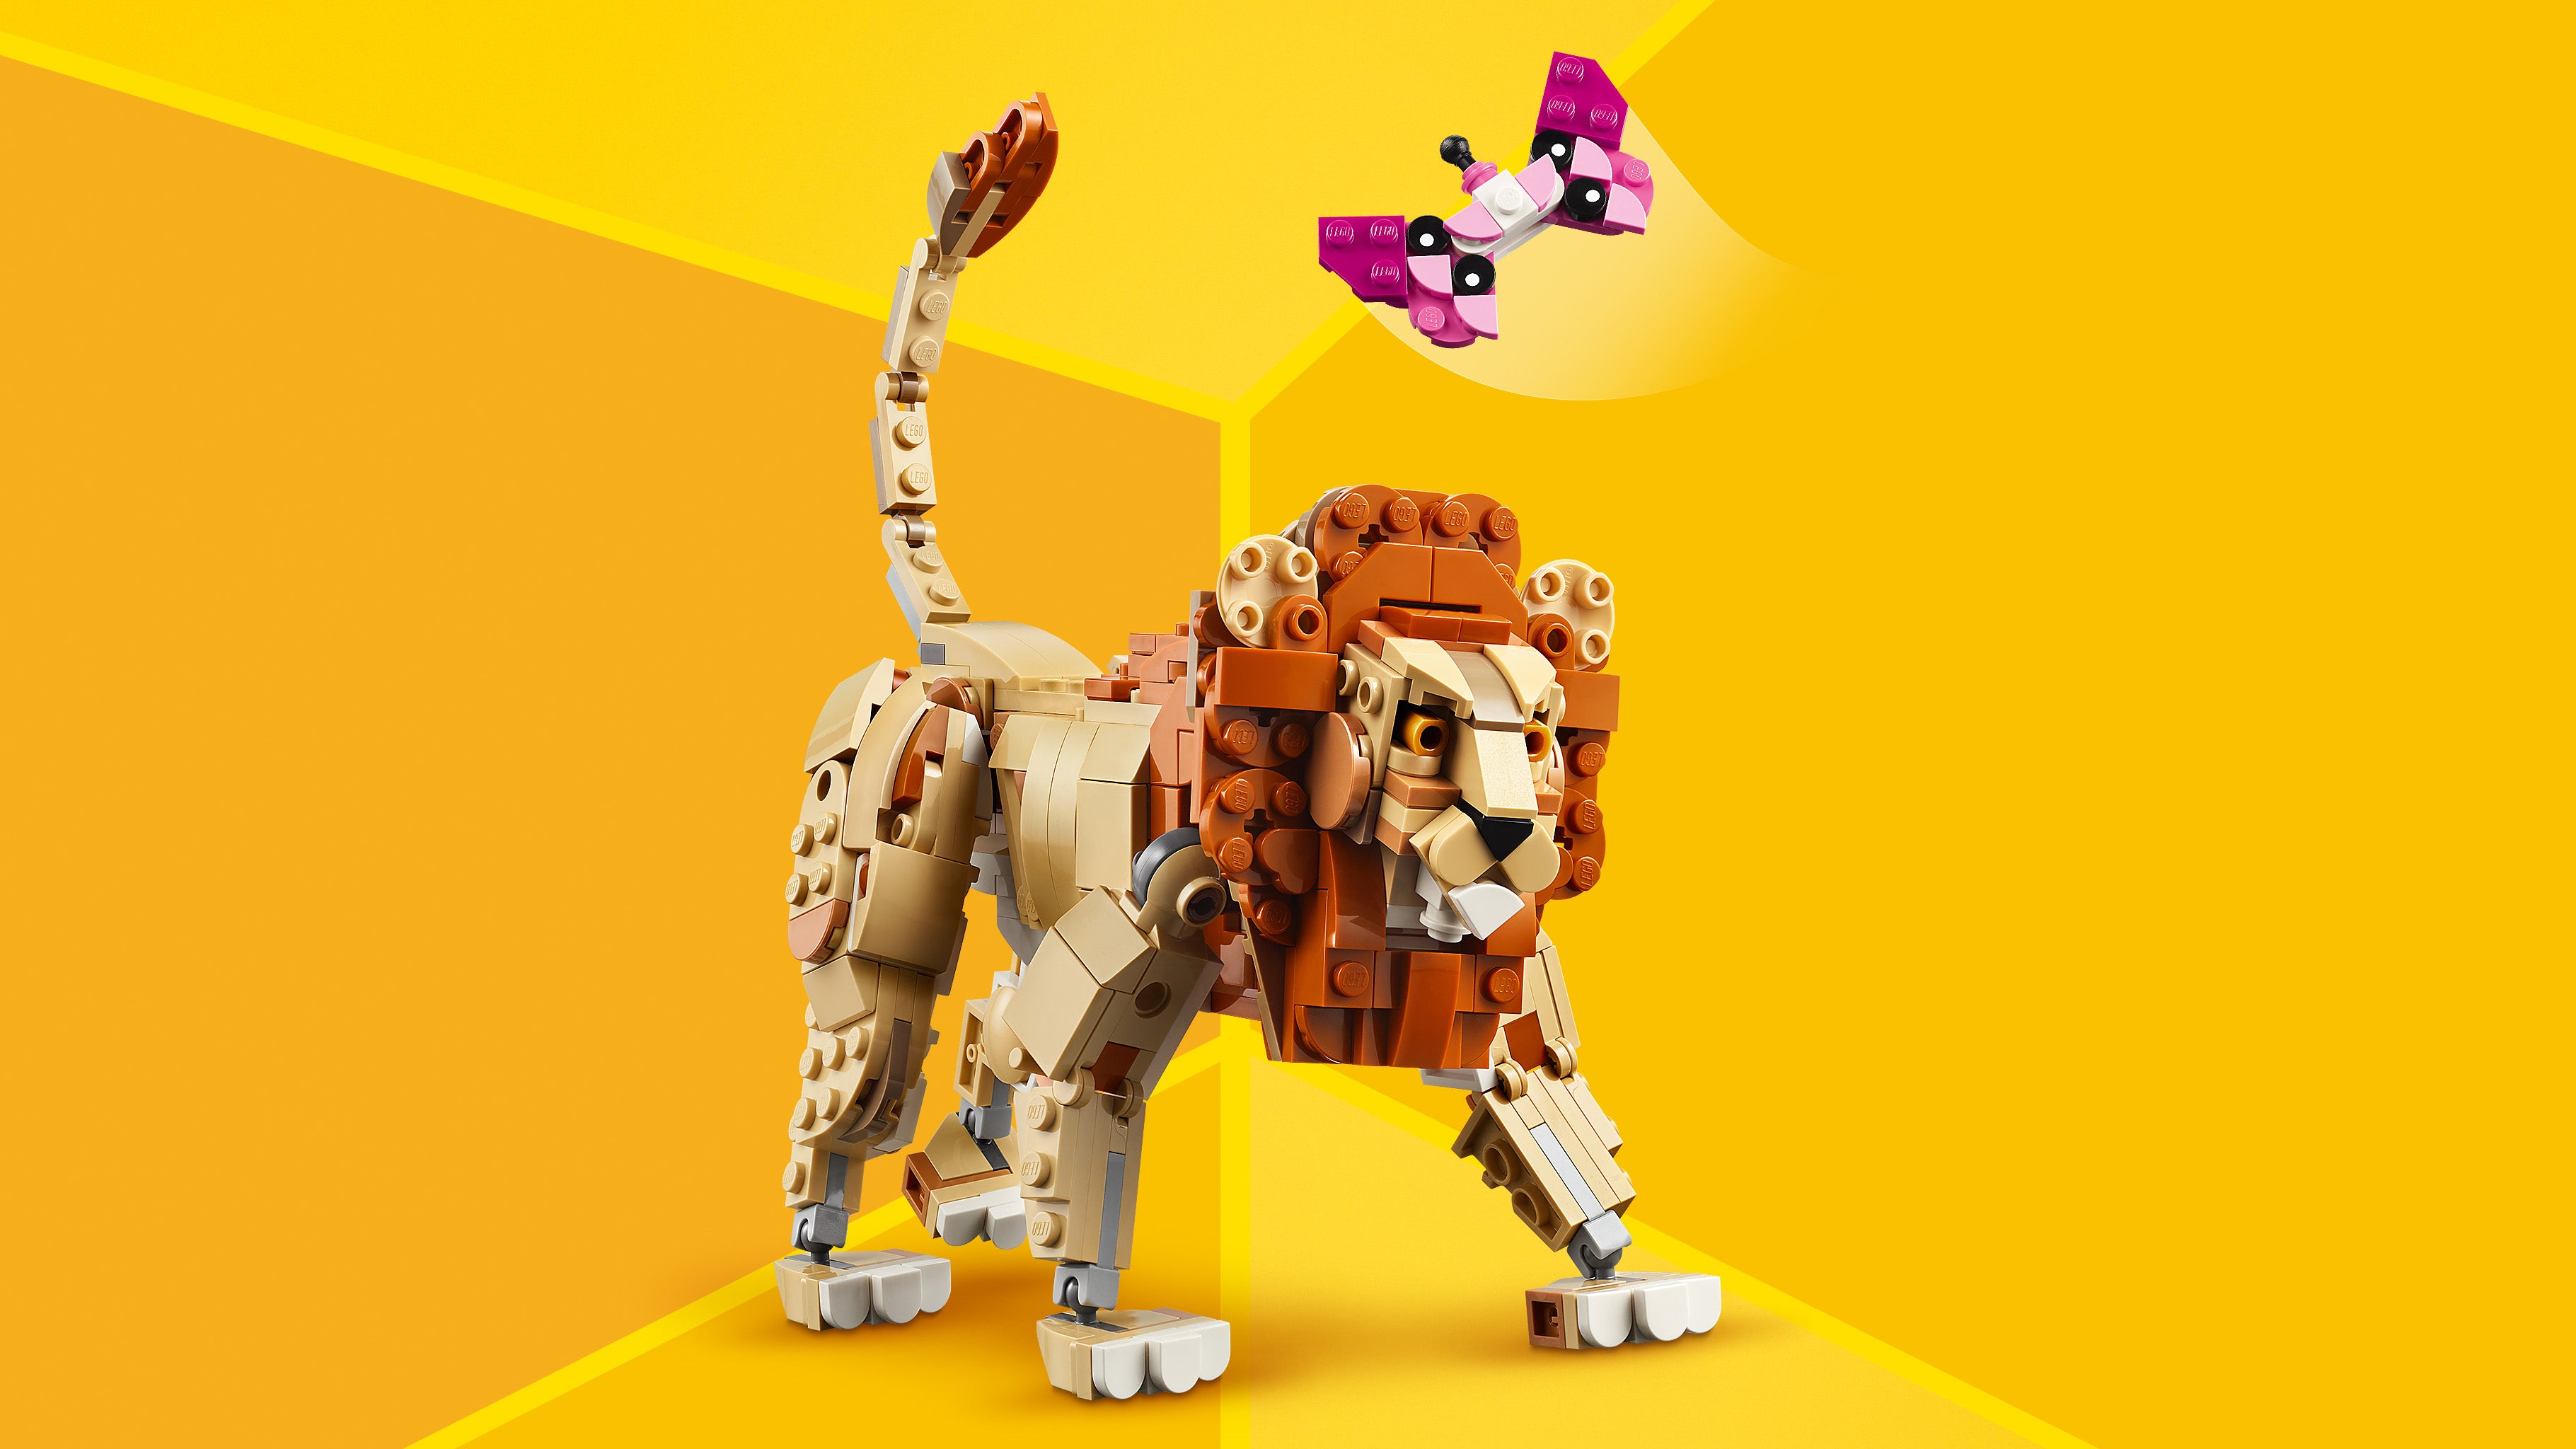 Lego 31150 Wild Safari Animals